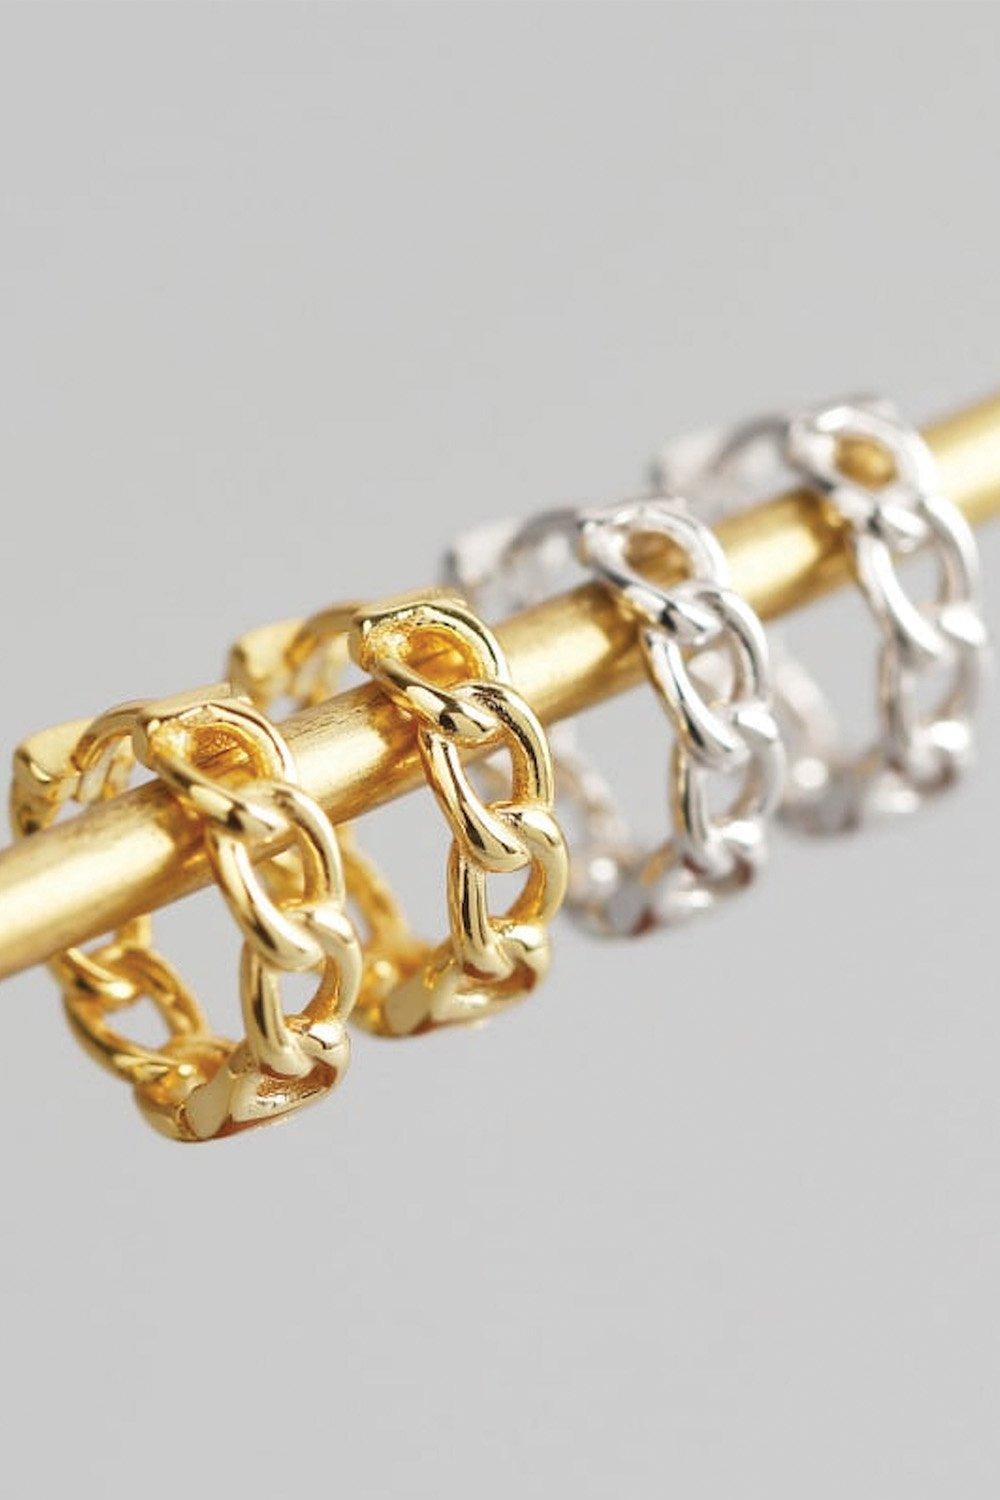 14k Gold Chain Hoop Earrings